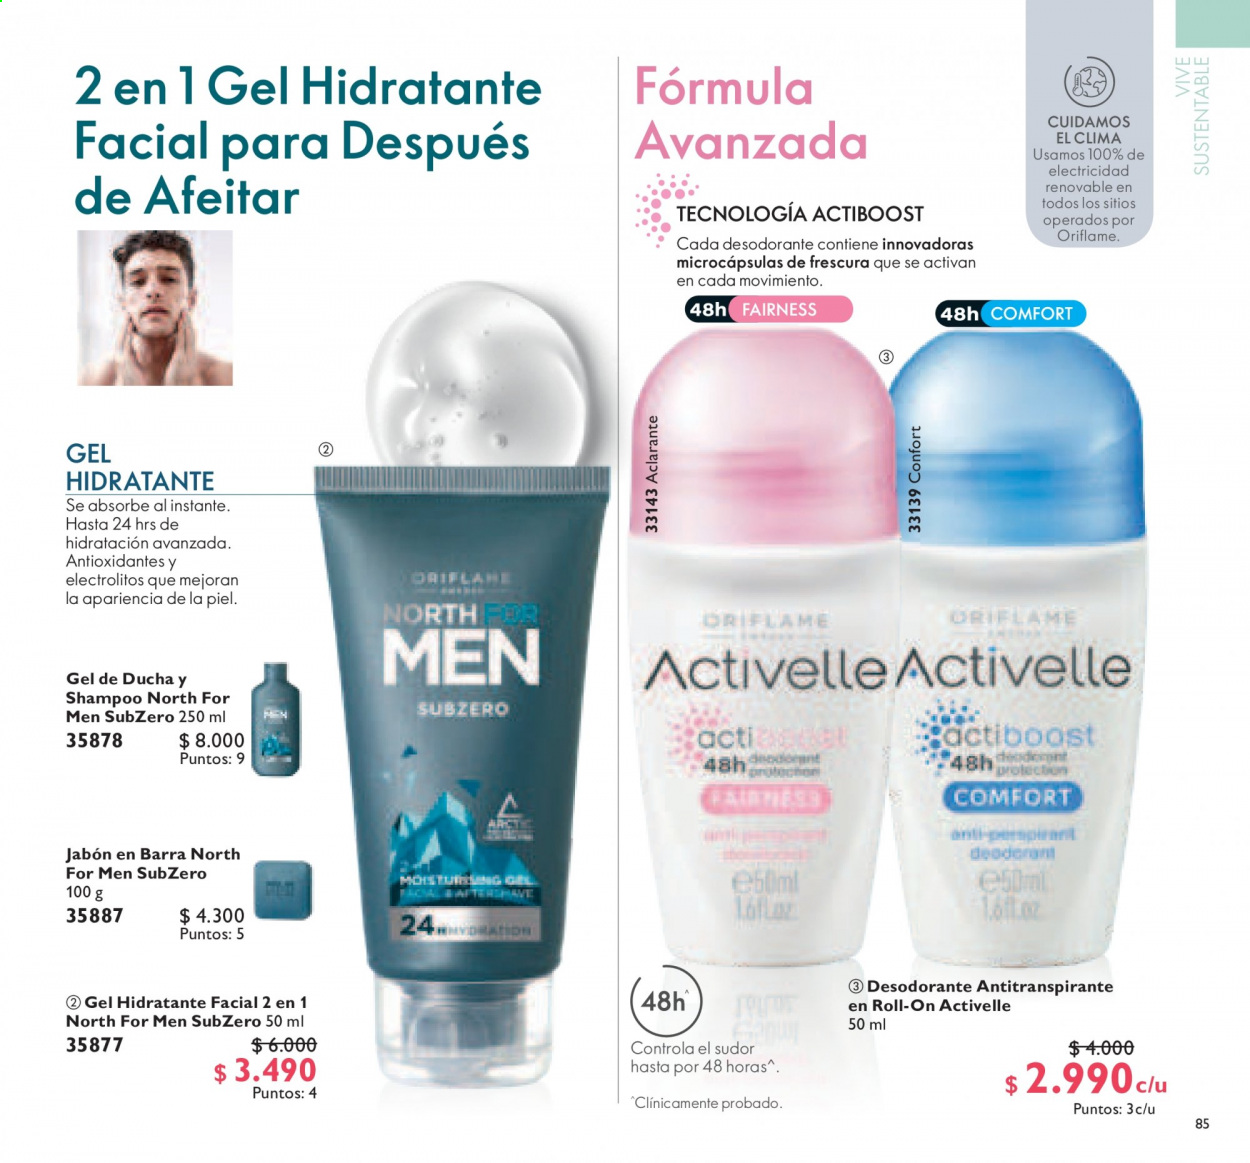 thumbnail - Catálogo Oriflame - 01.04.2021 - 30.04.2021 - Ventas - desodorante de bola, gel hidratante, champú, desodorante, antitranspirante. Página 85.